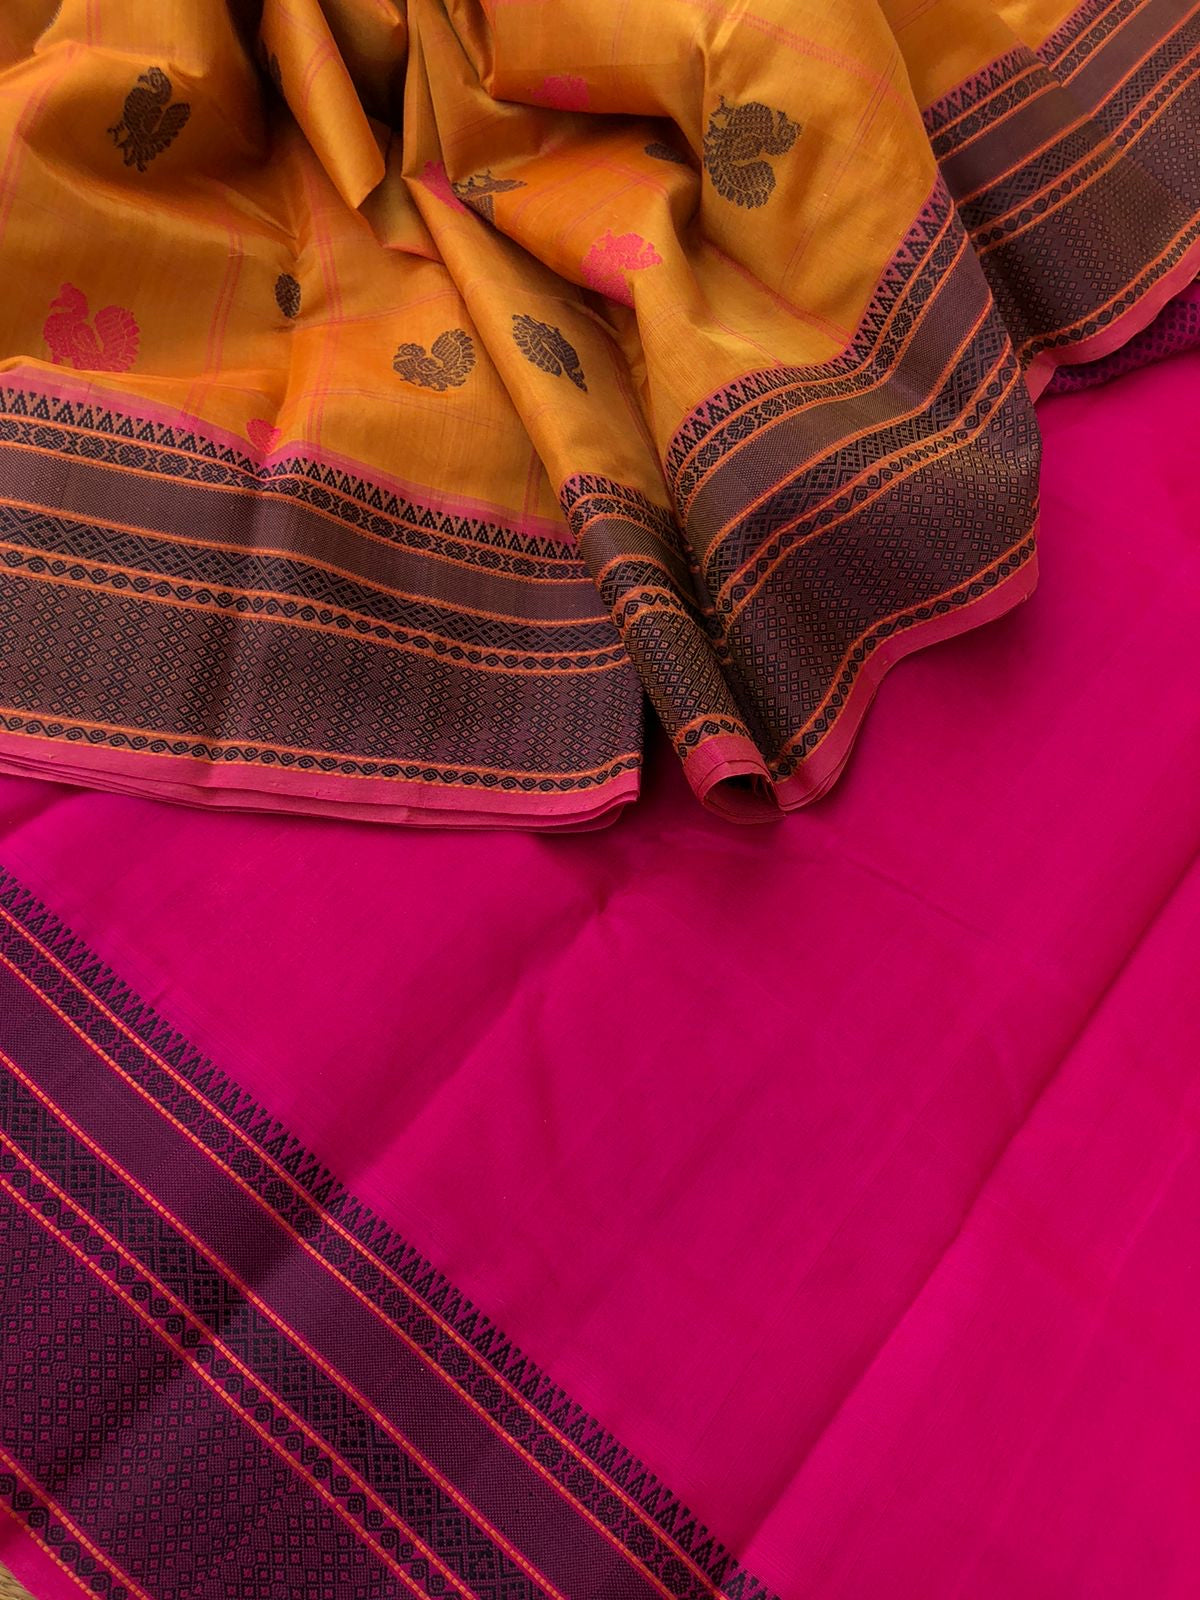 Woven Motifs Silk Cotton - rusty mustard and pink mayil chackaram